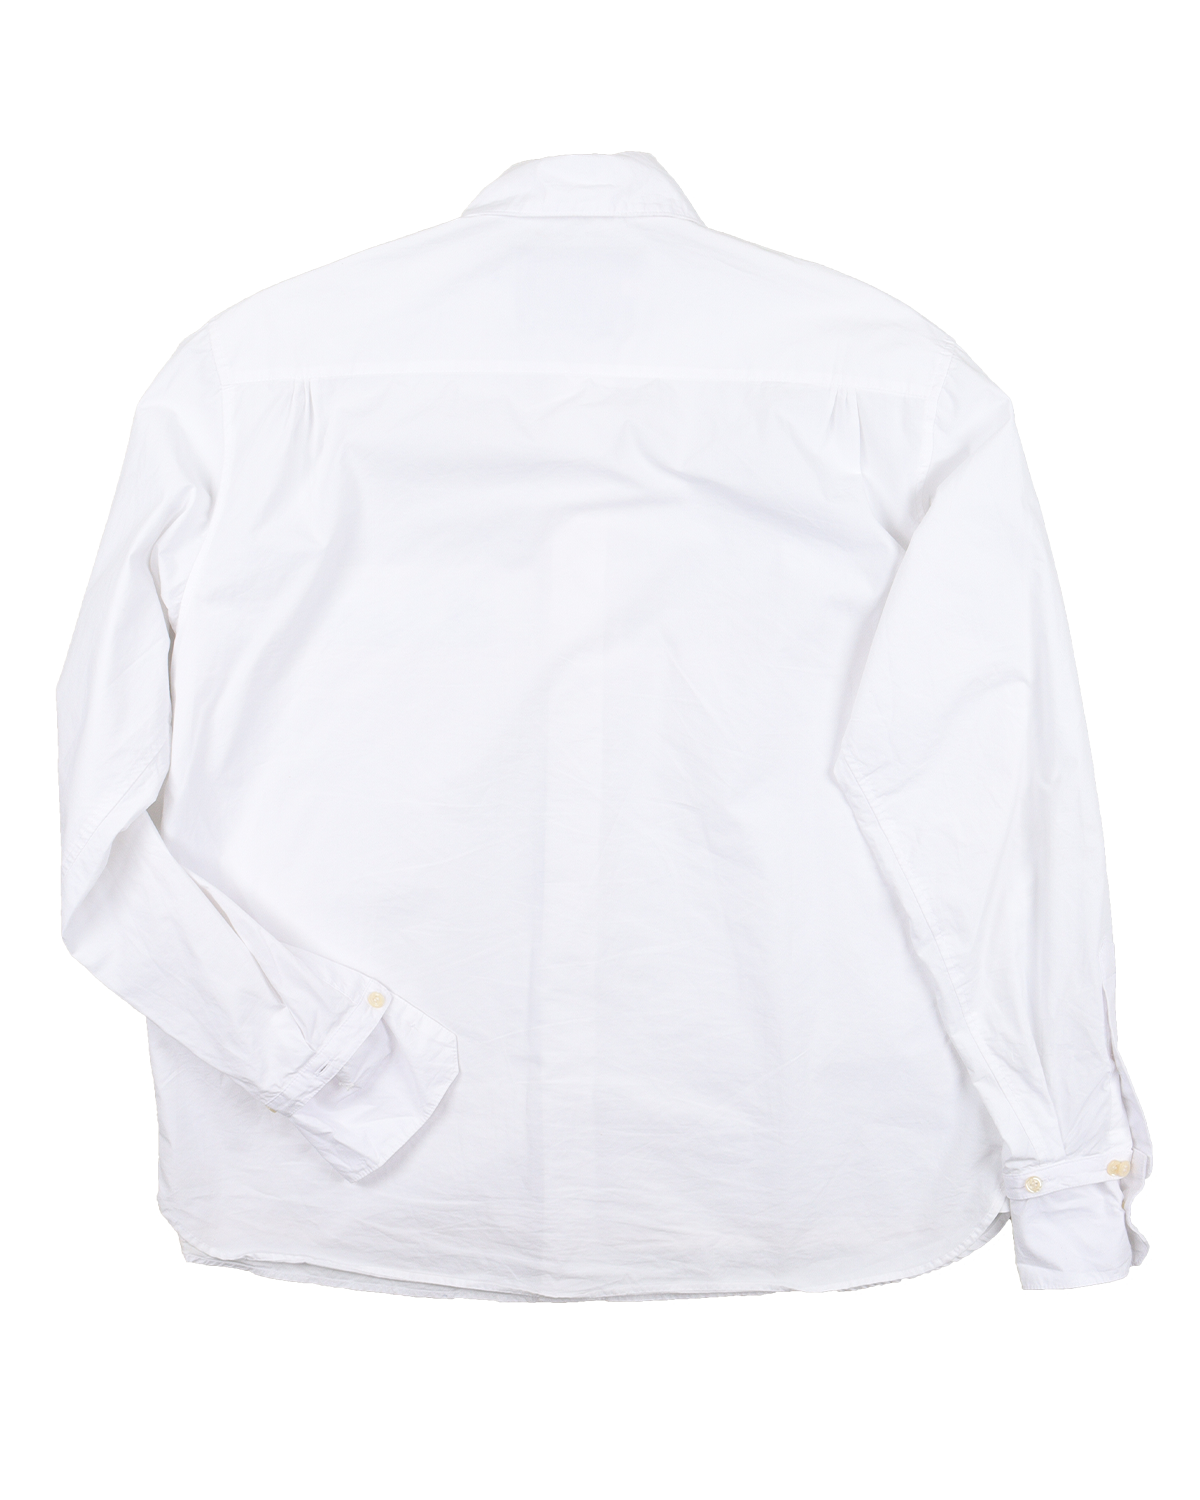 AW16 Christophe Chemin Long Sleeve Shirt